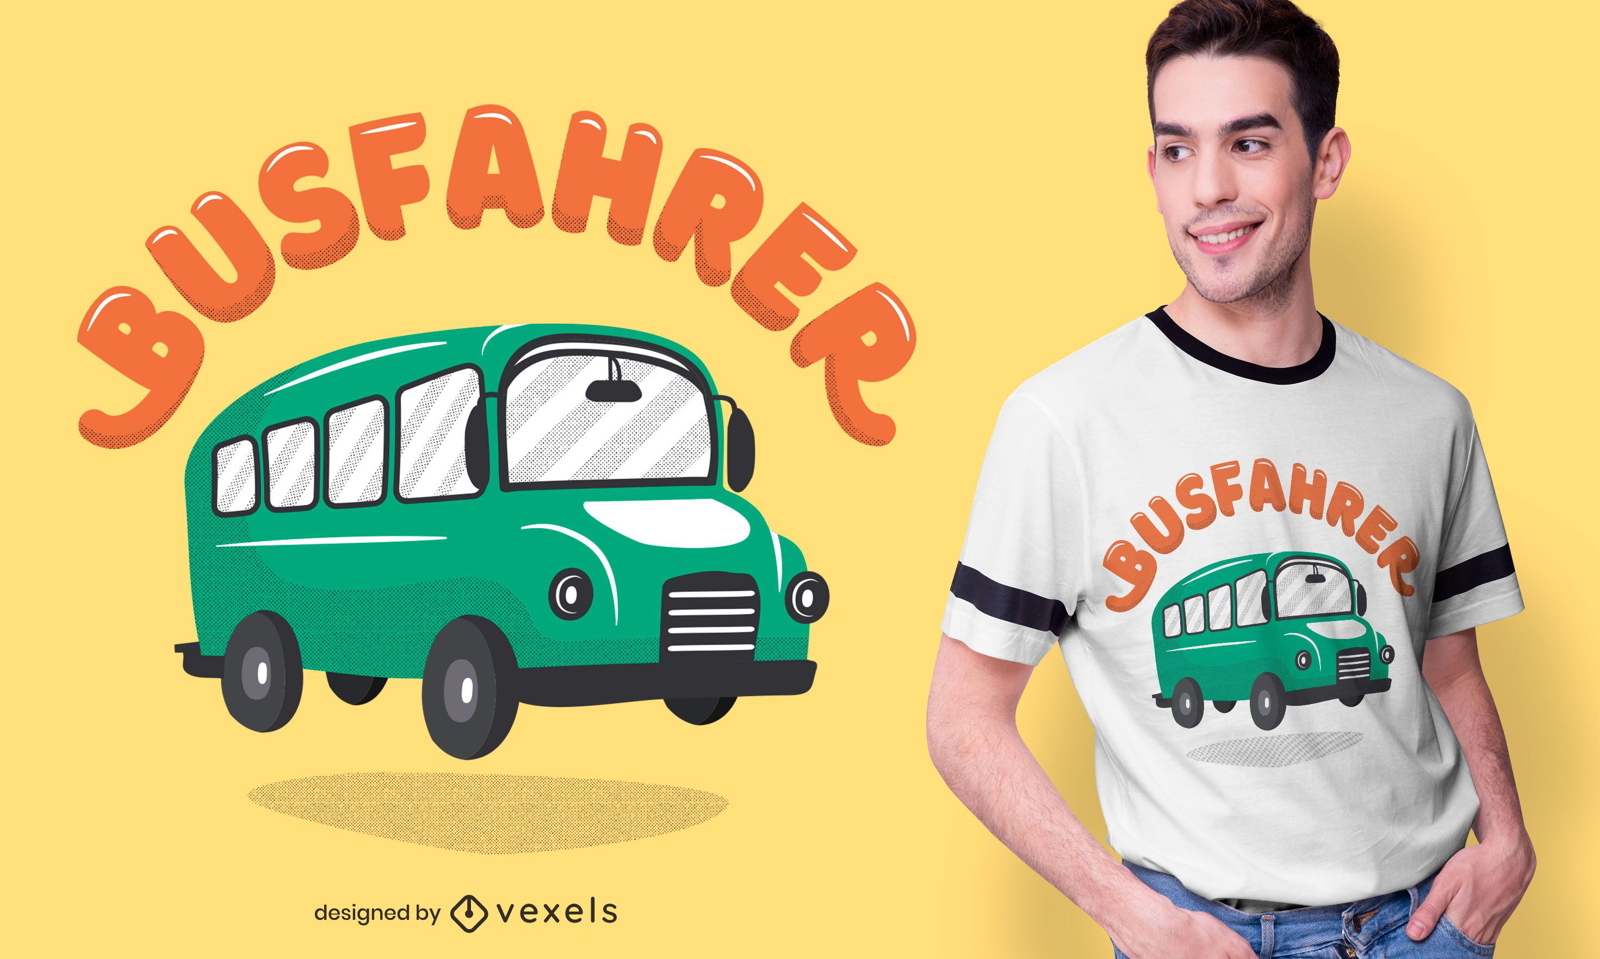 Busfahrer Deutsches T-Shirt Design